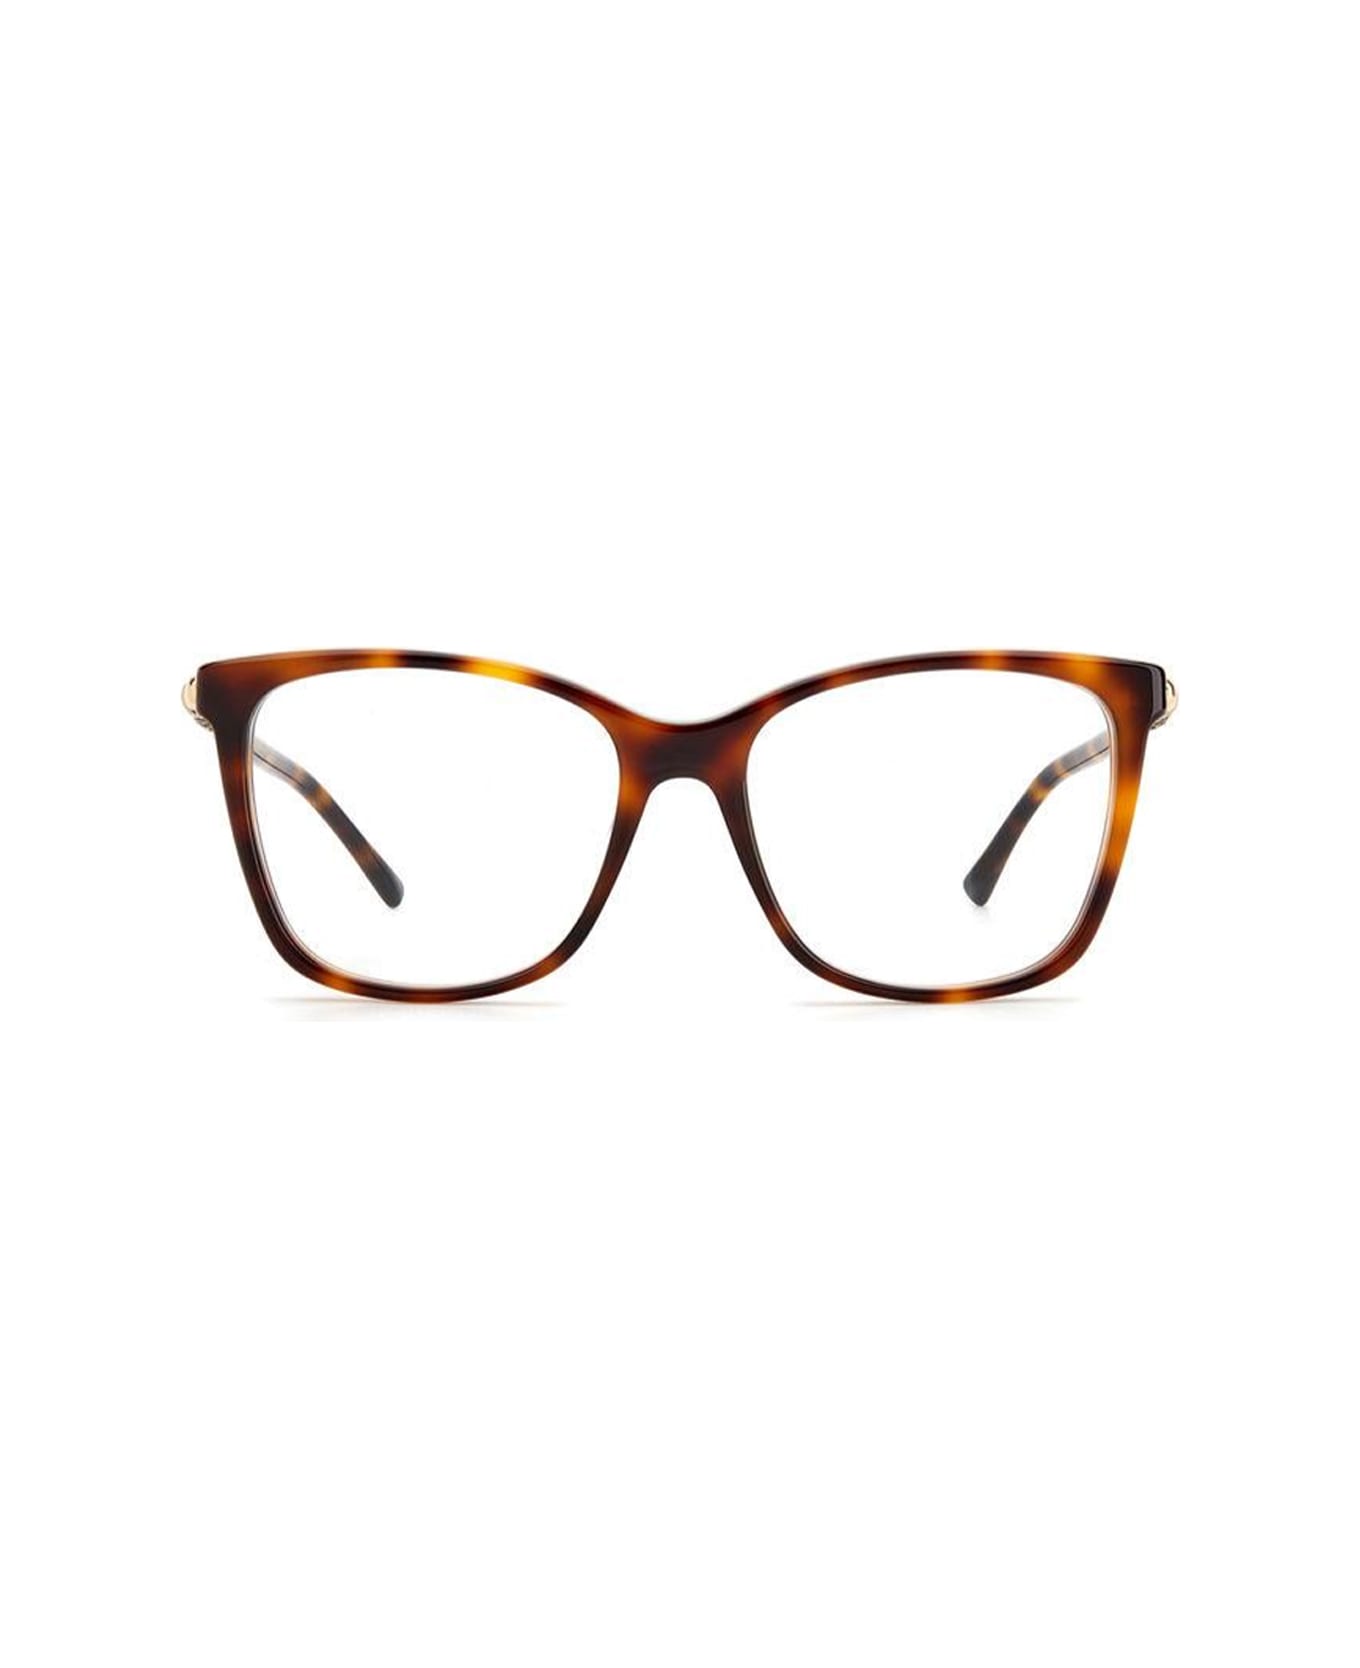 Jimmy Choo Eyewear Jc294/g 086/17 Glasses - Marrone